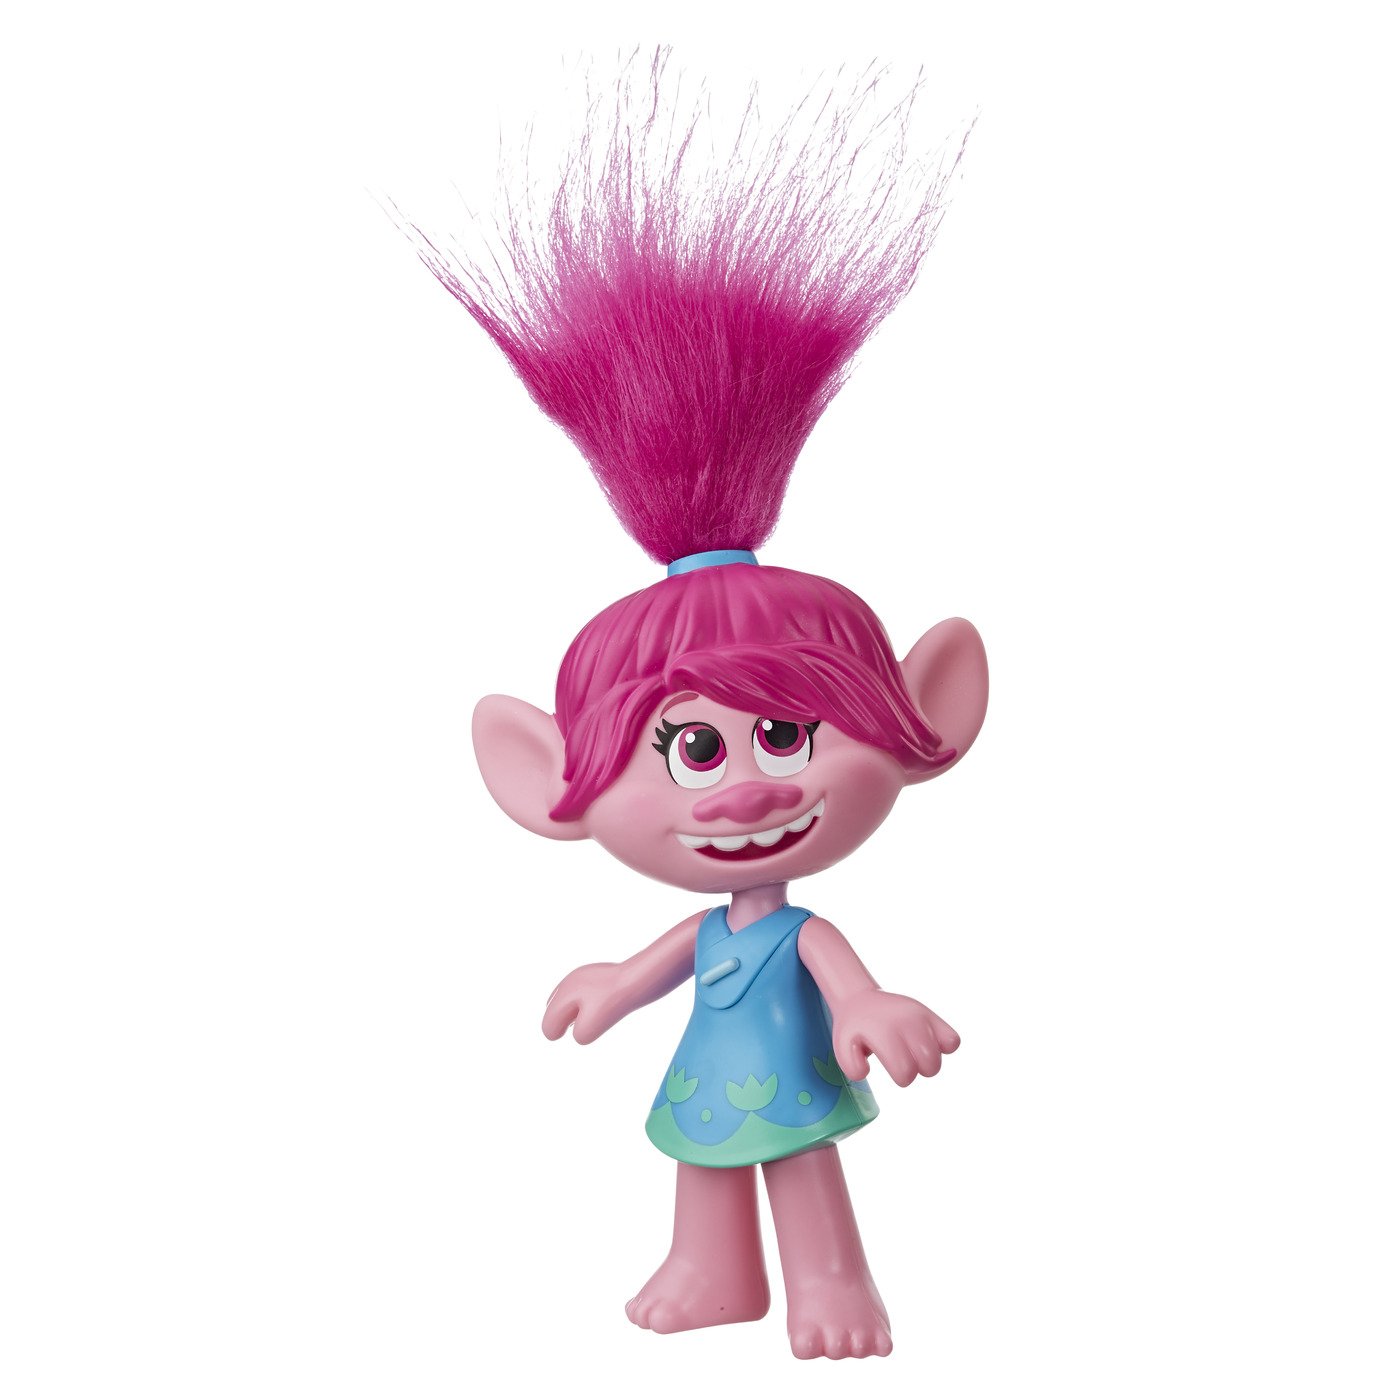 DreamWorks Trolls World Tour Superstar Poppy Doll Review